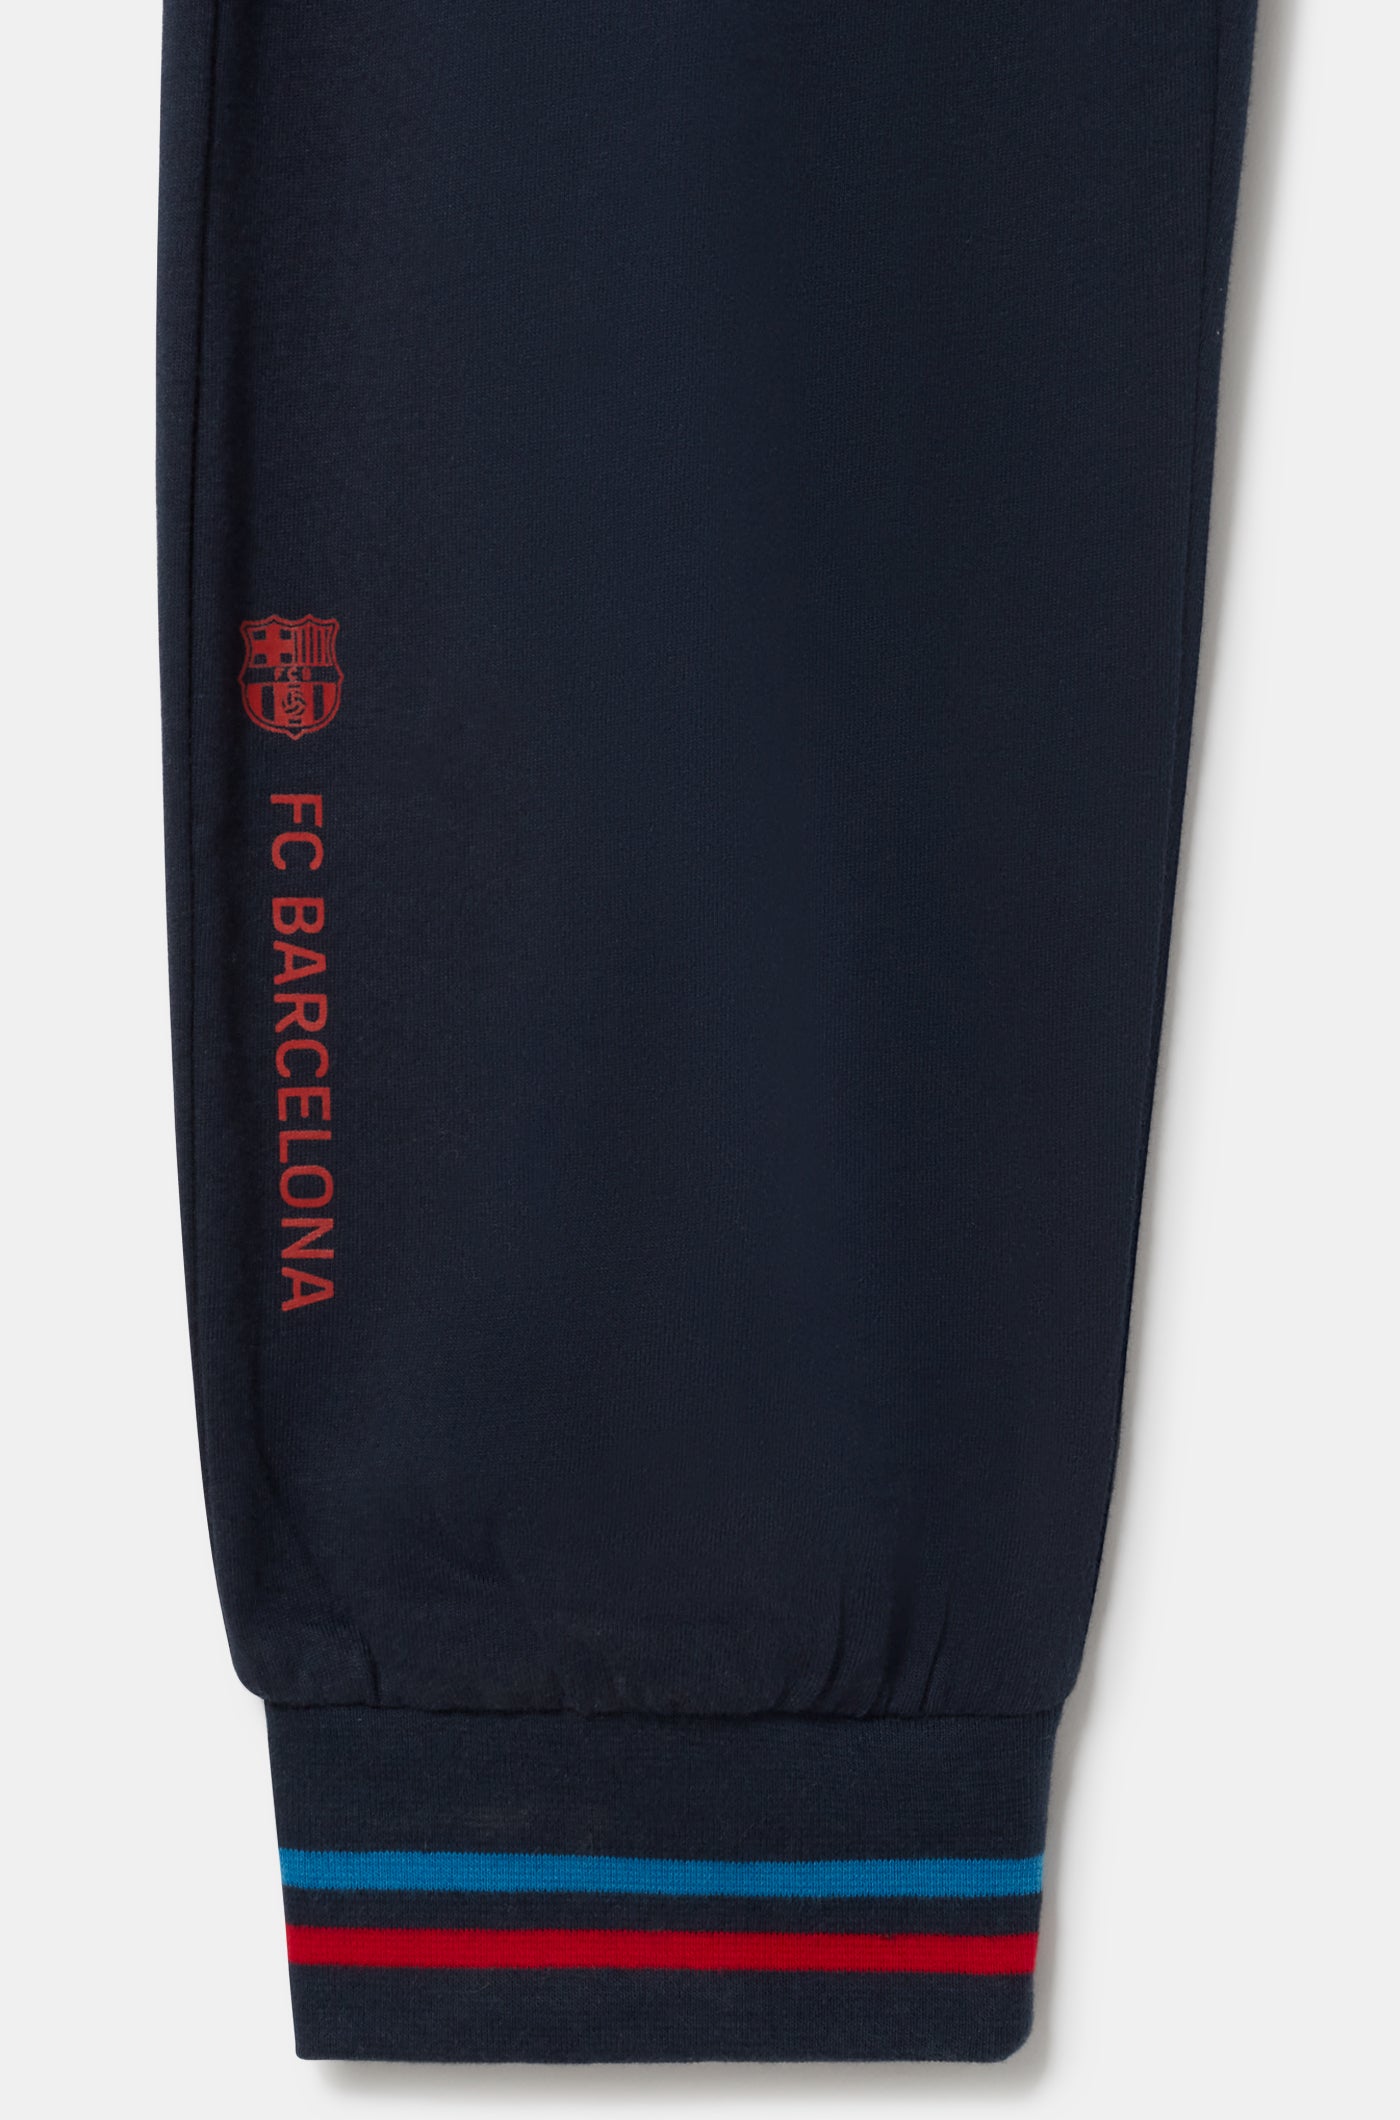 FC Barcelona pyjamas with navy crest